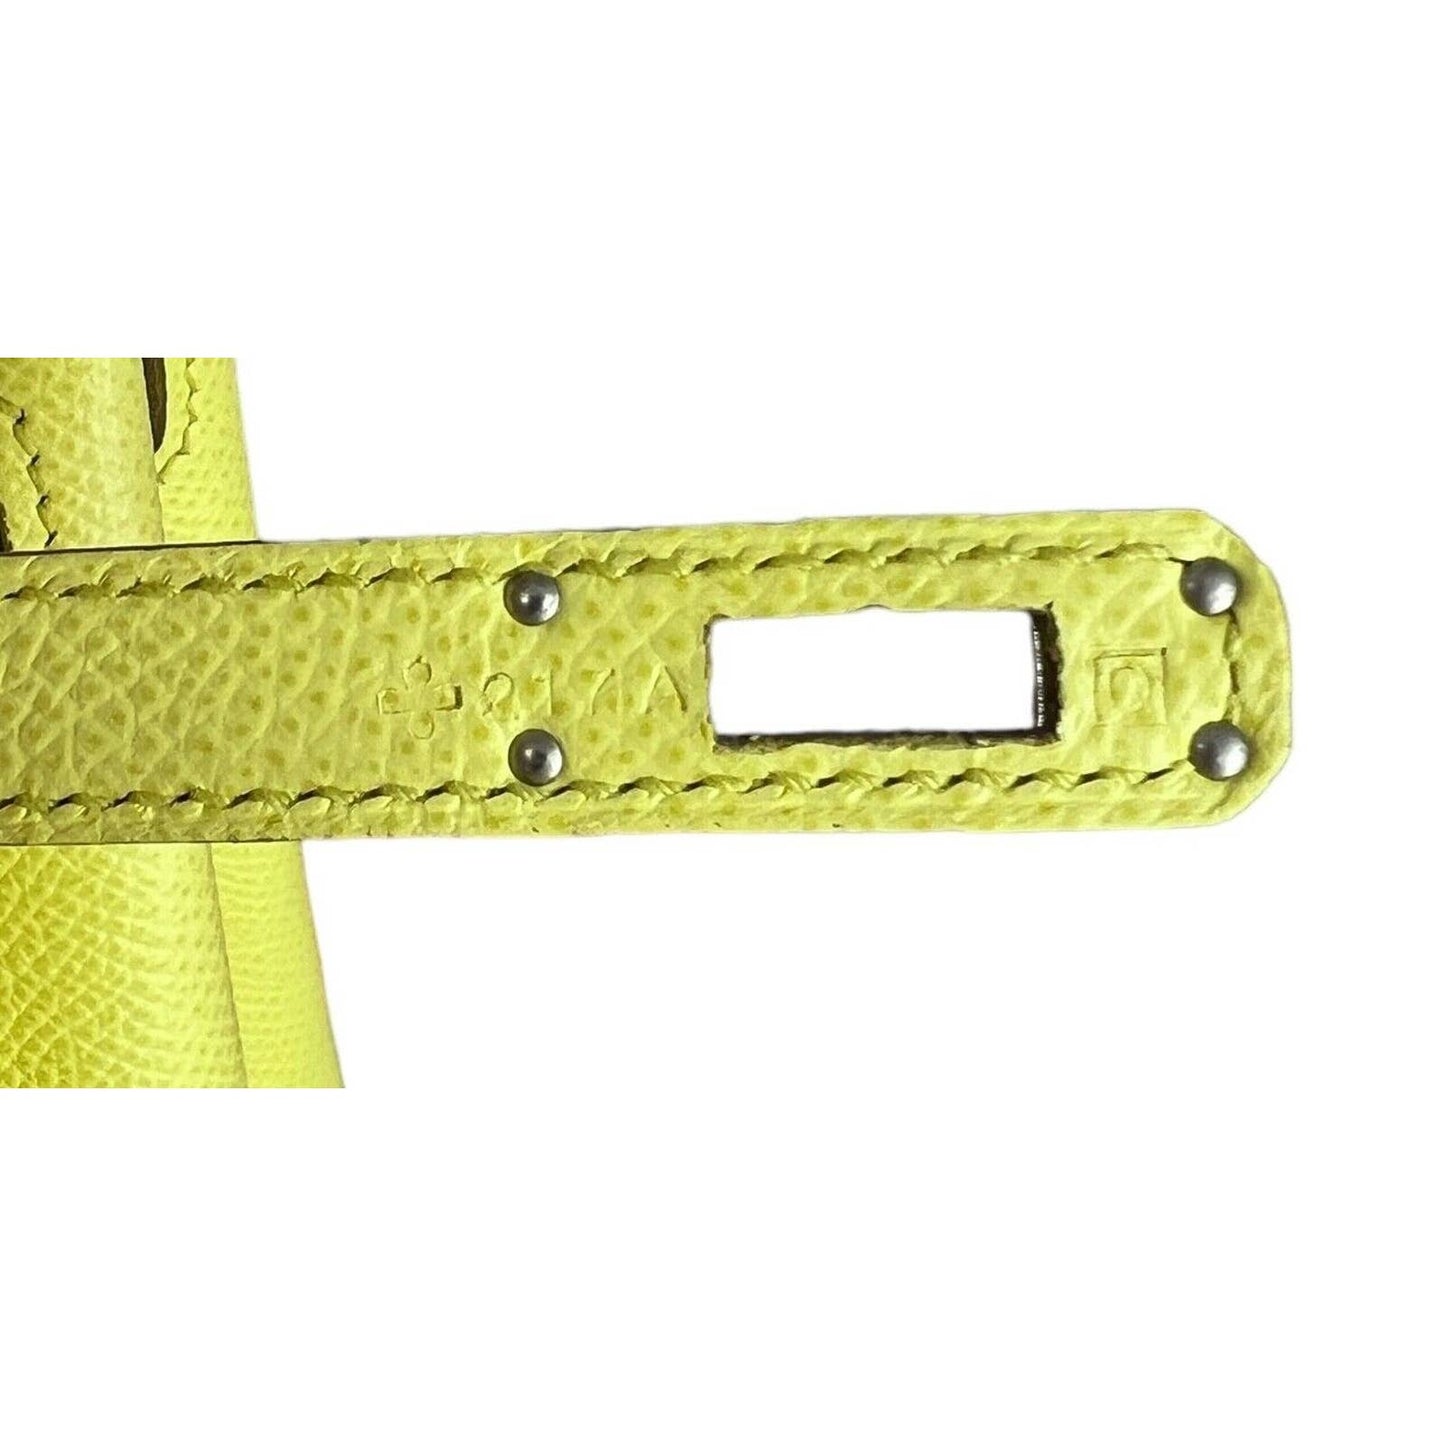 Hermes Birkin 25 Lime Yellow Epsom Leather Palladium Hardware Bag Handbag